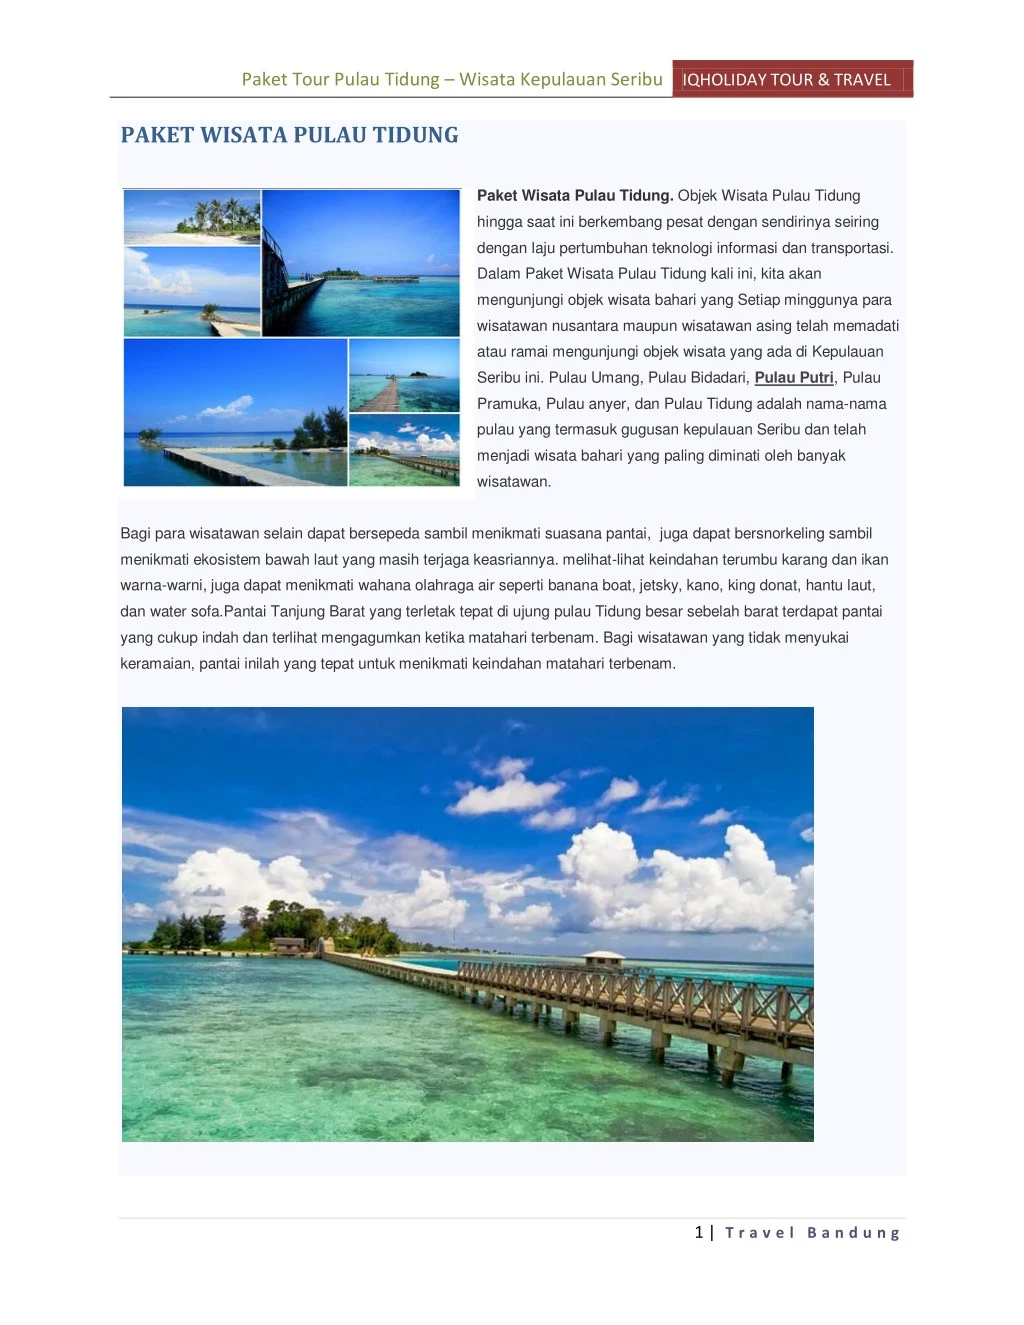 PPT Paket wisata Pulau Tidung PowerPoint Presentation